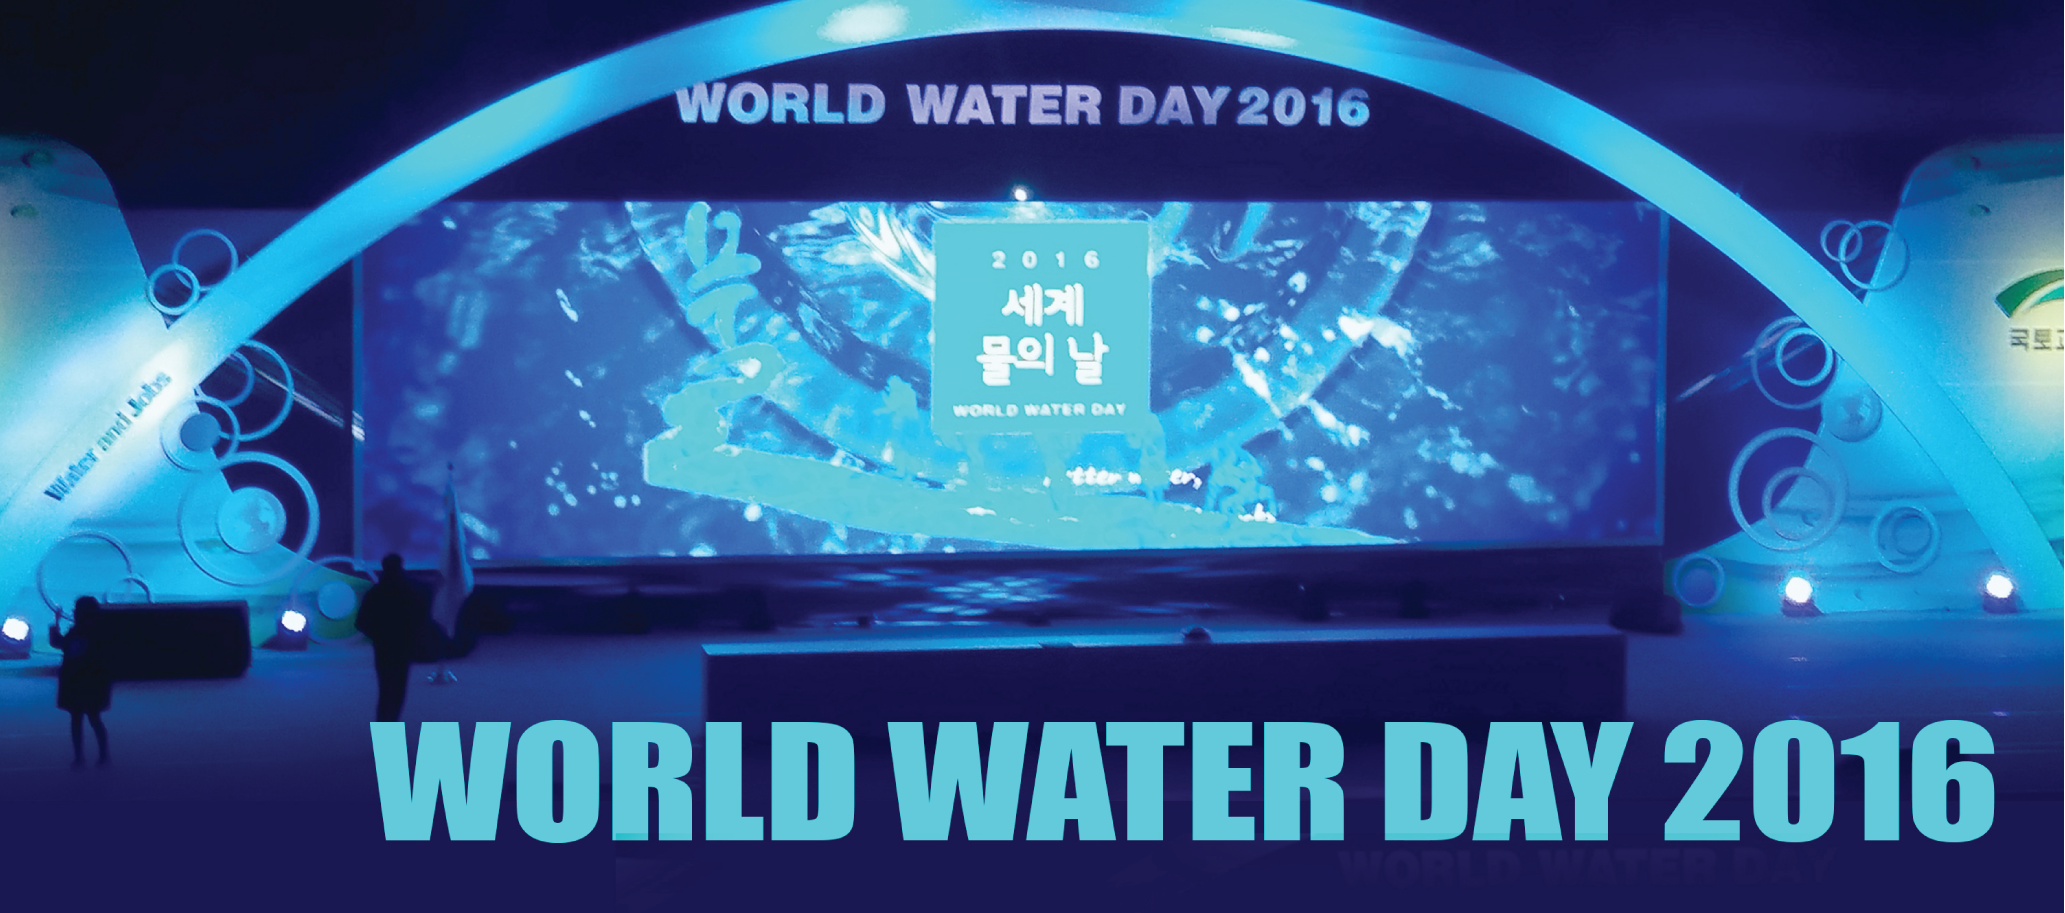 WORLD WATER DAY 2016